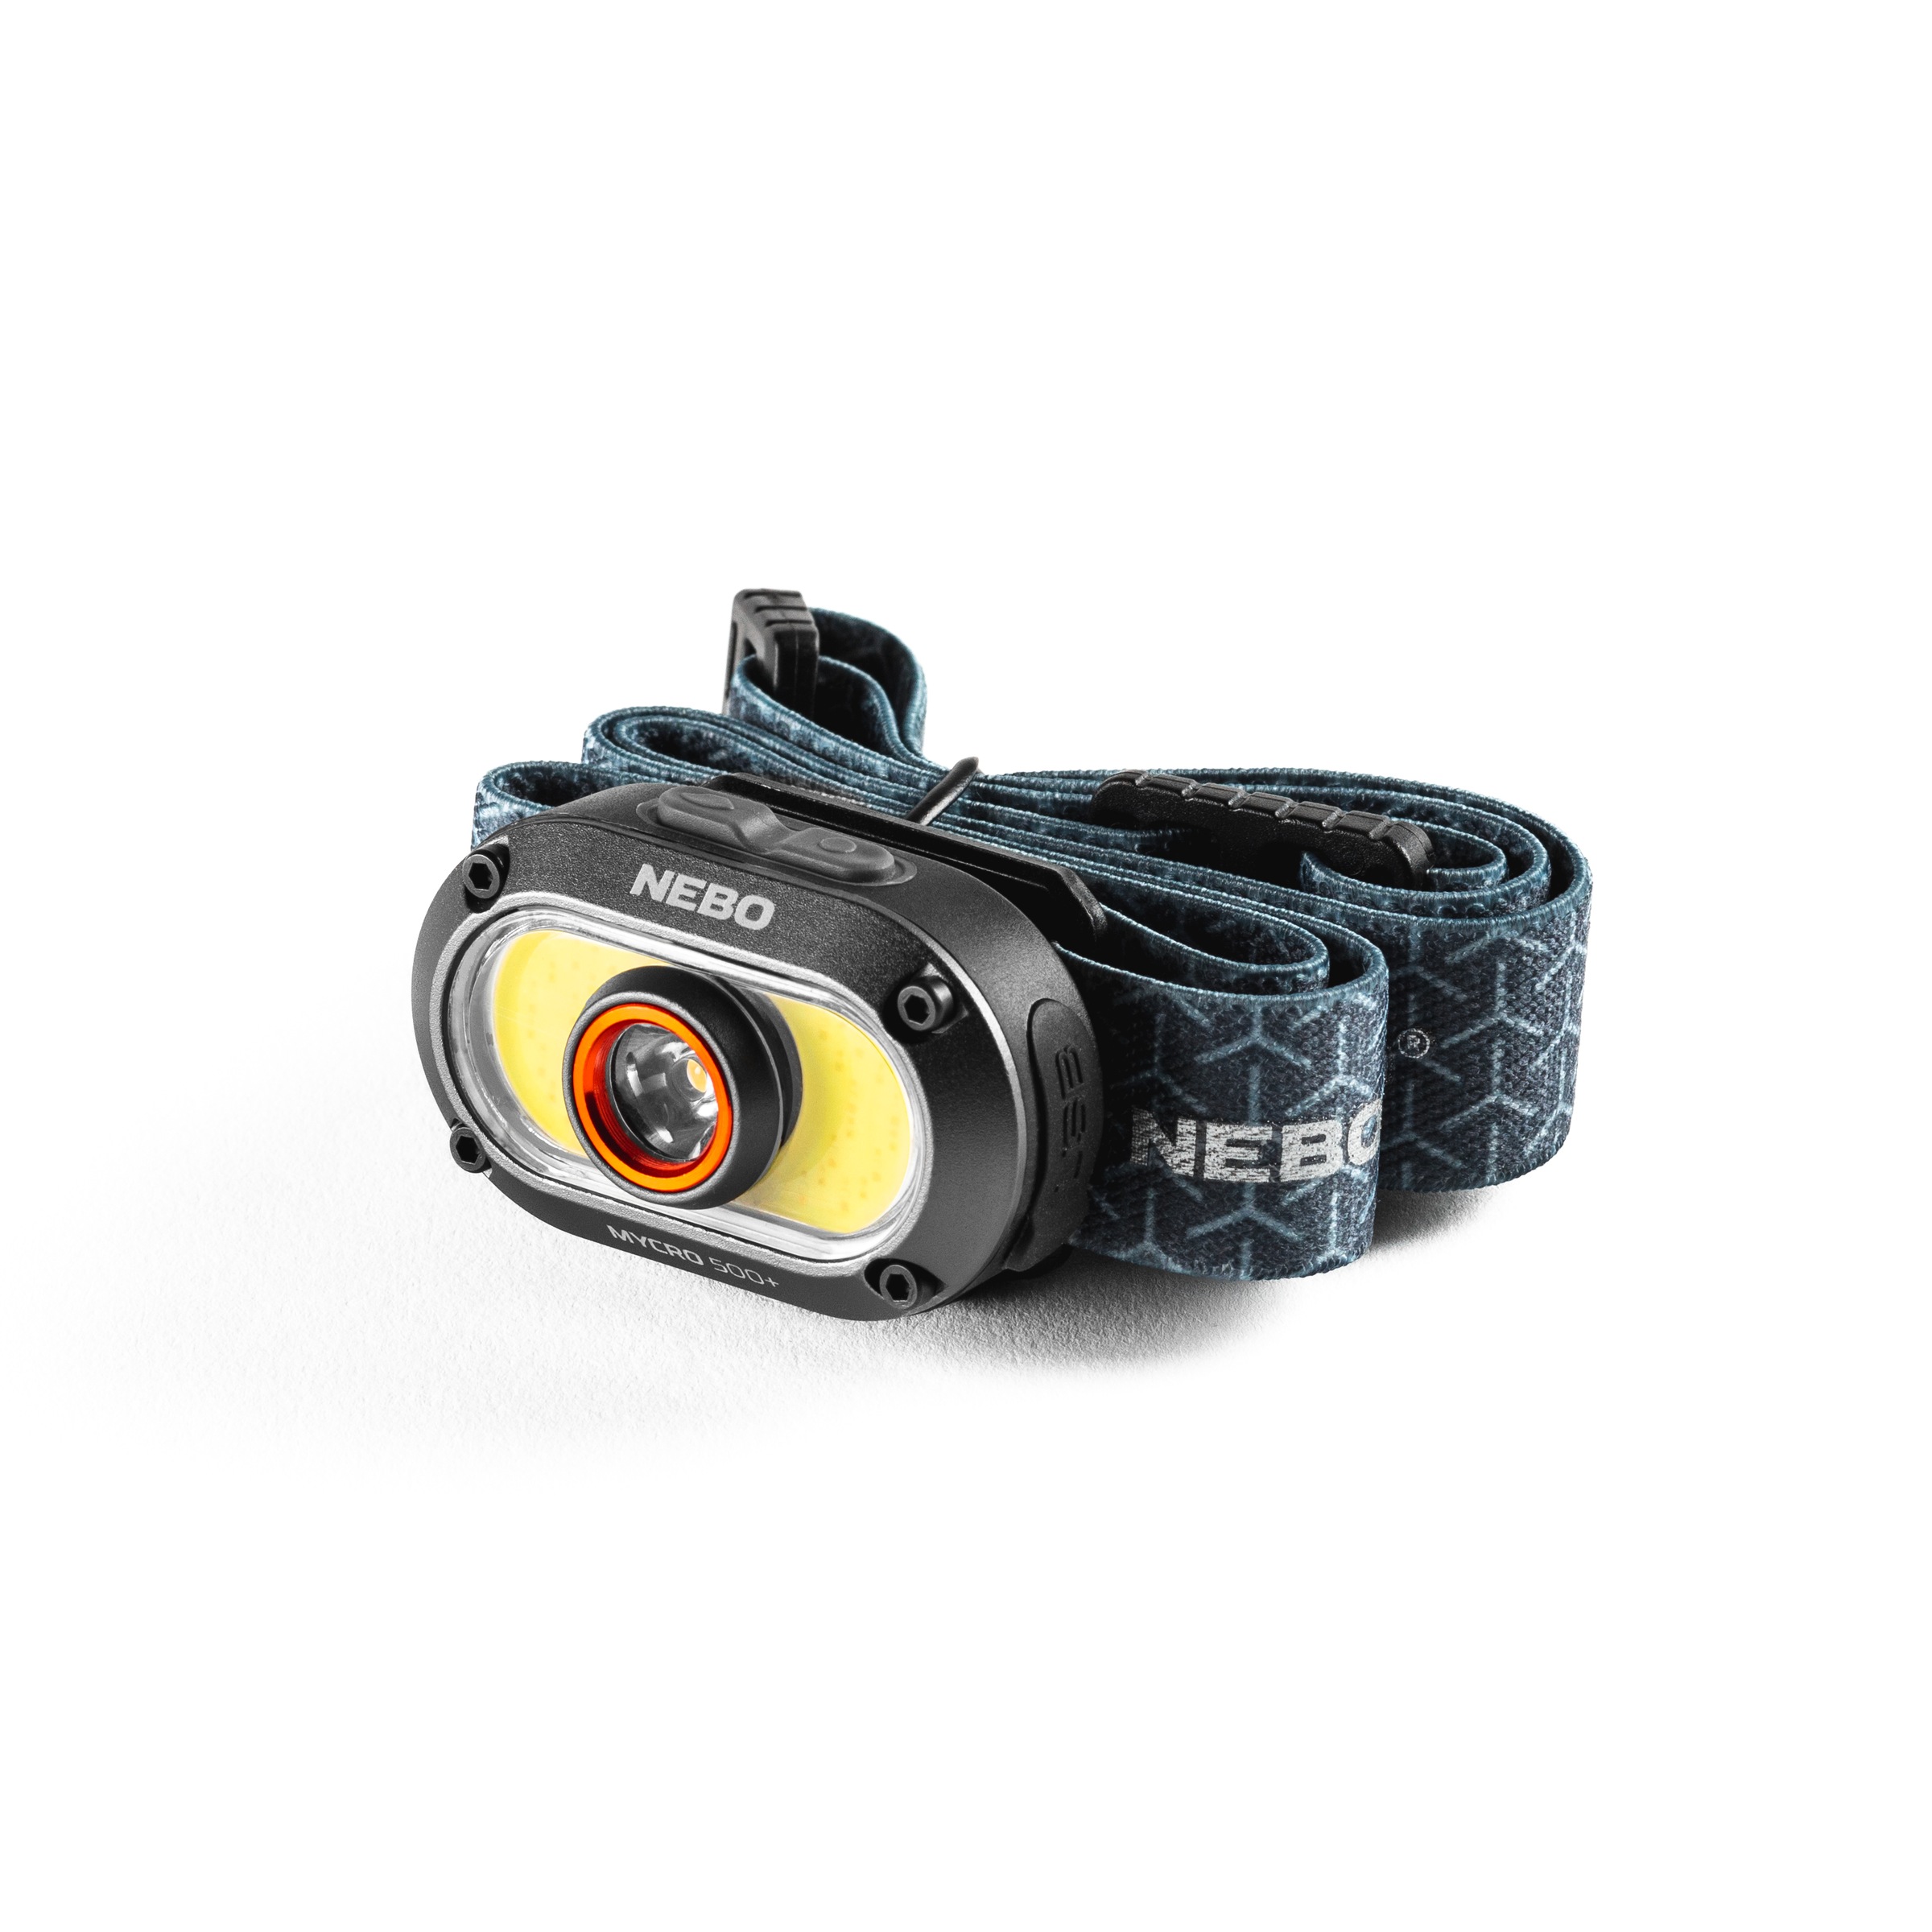 NEBO LED Stirnlampe »MYCRO 500+«, wiederaufladbar, Turbo-Mode